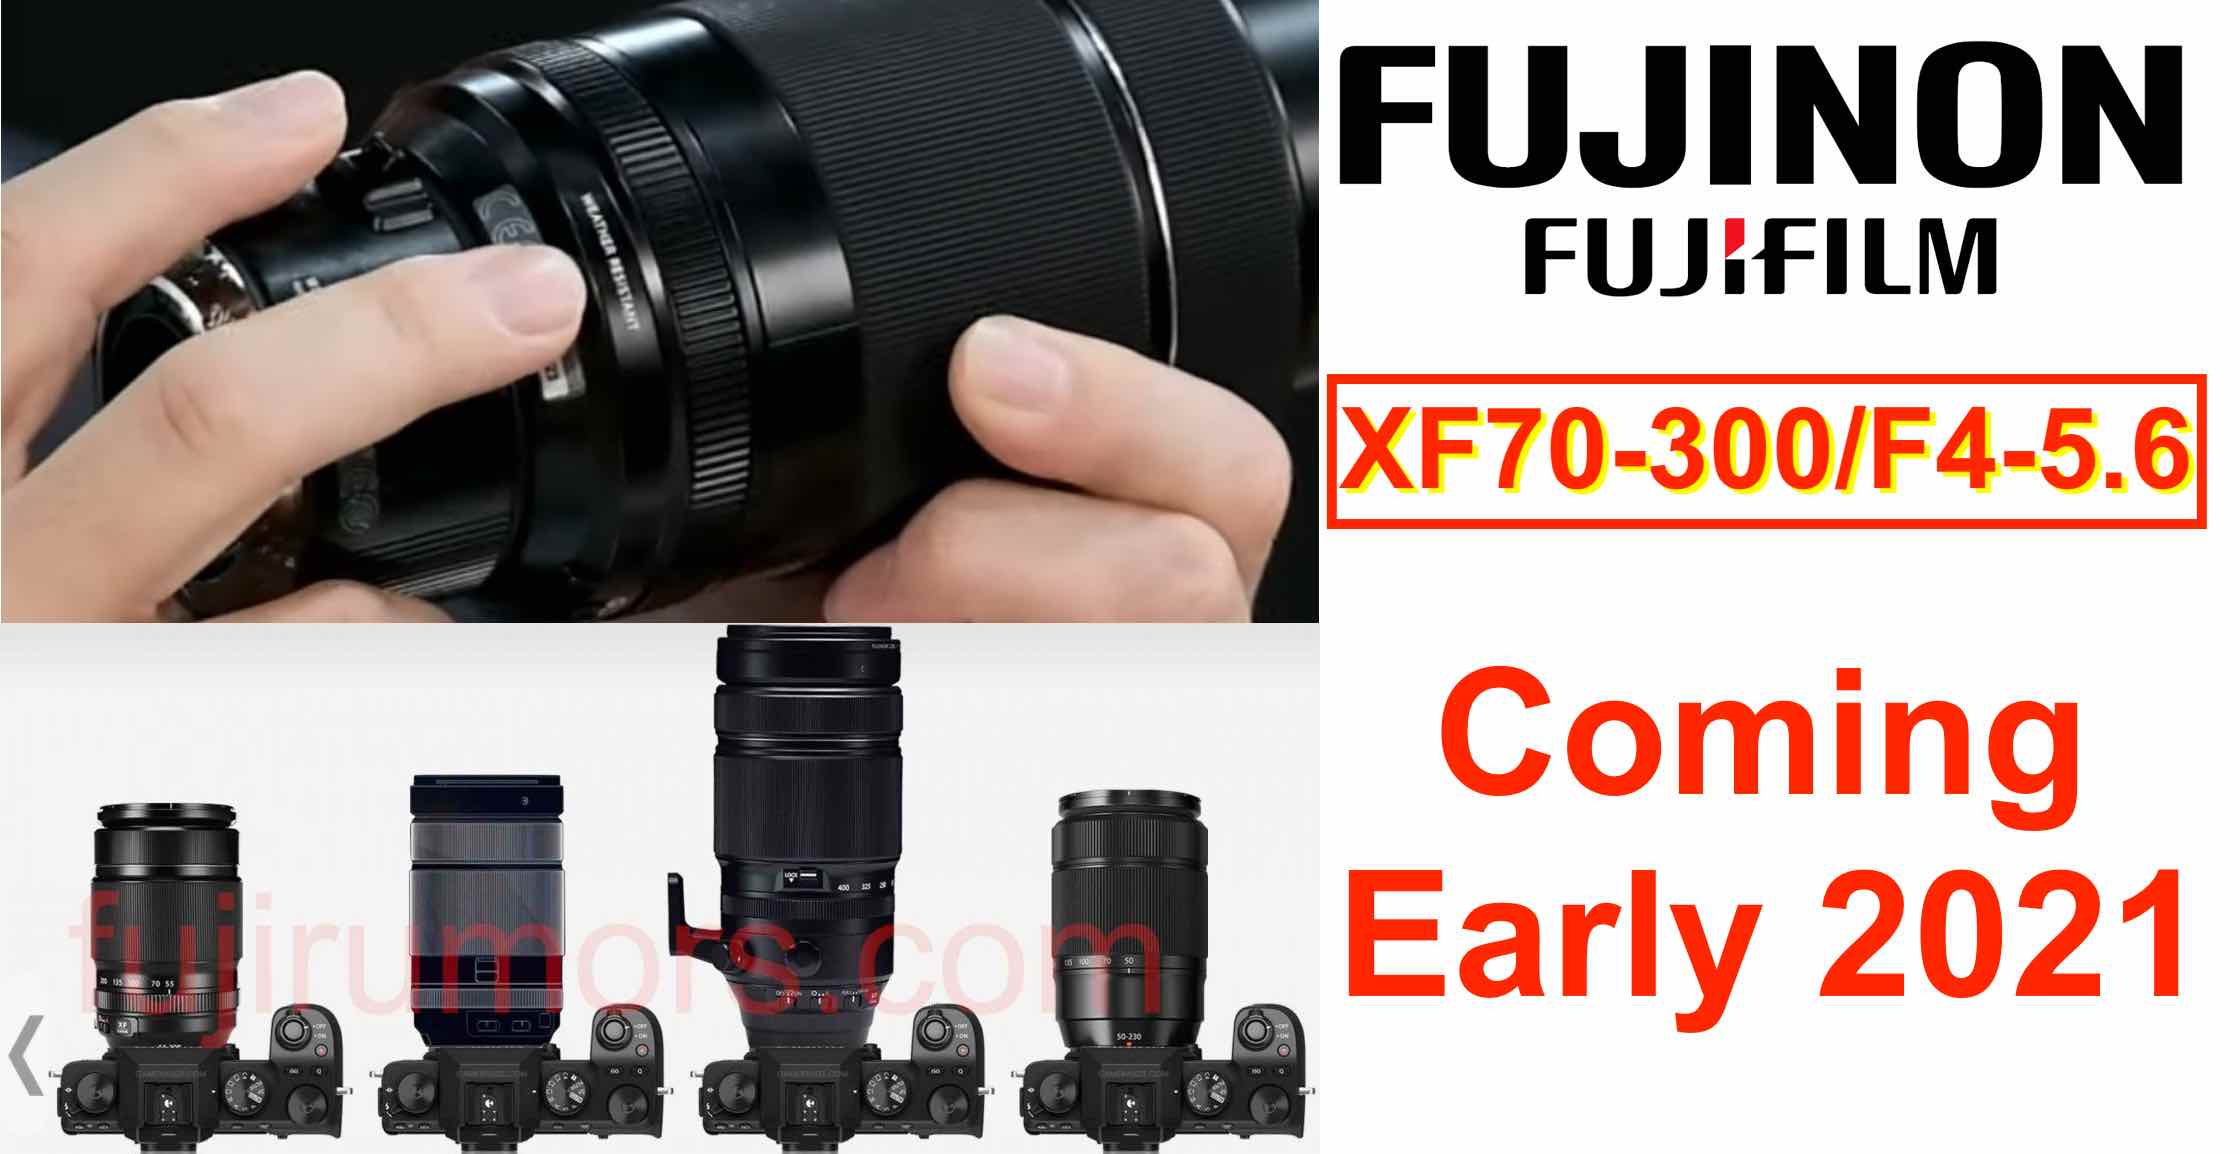 Gemiddeld Kenia De neiging hebben BREAKING: Fujinon XF 70-300mm F4-5.6 Coming Early 2021 - Fuji Rumors